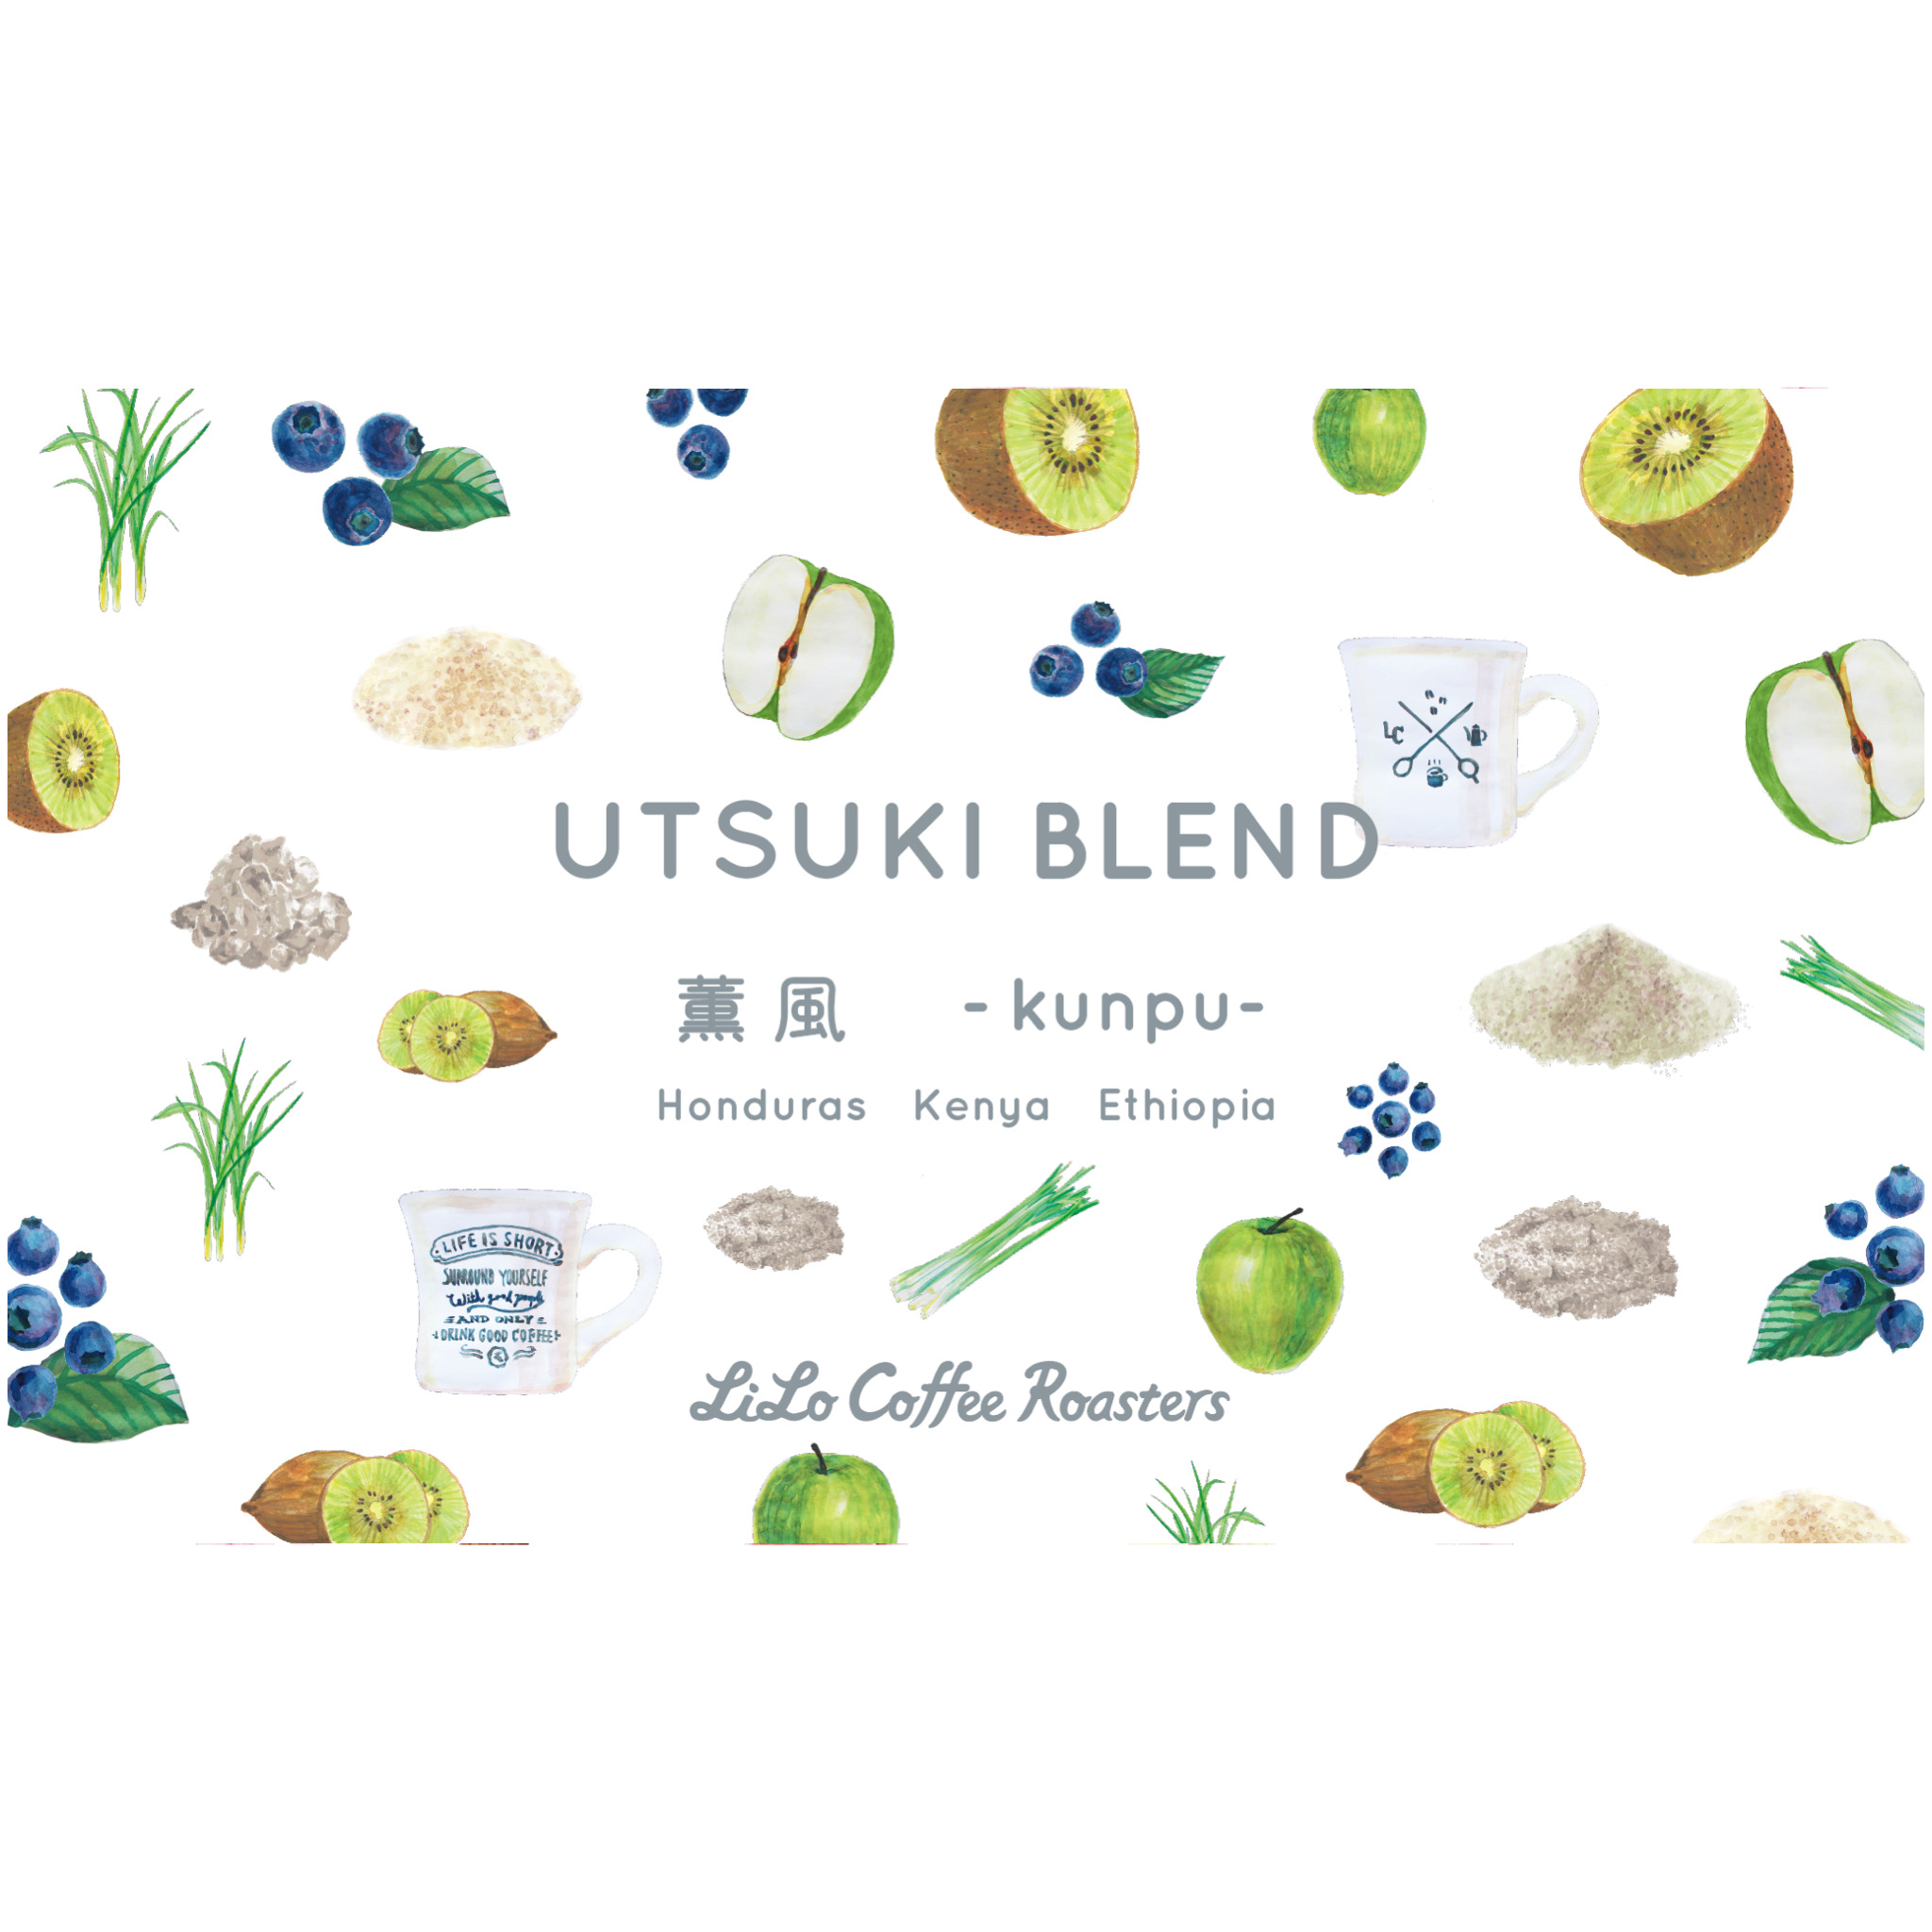 【LiLo Coffee Roasters】春の息吹を感じられる透明感のある口当たりと、気分も一新するような爽やかなコク。シーズナルブレンド『UTSUKI Blend ~薫風~ kunpu』を発売。